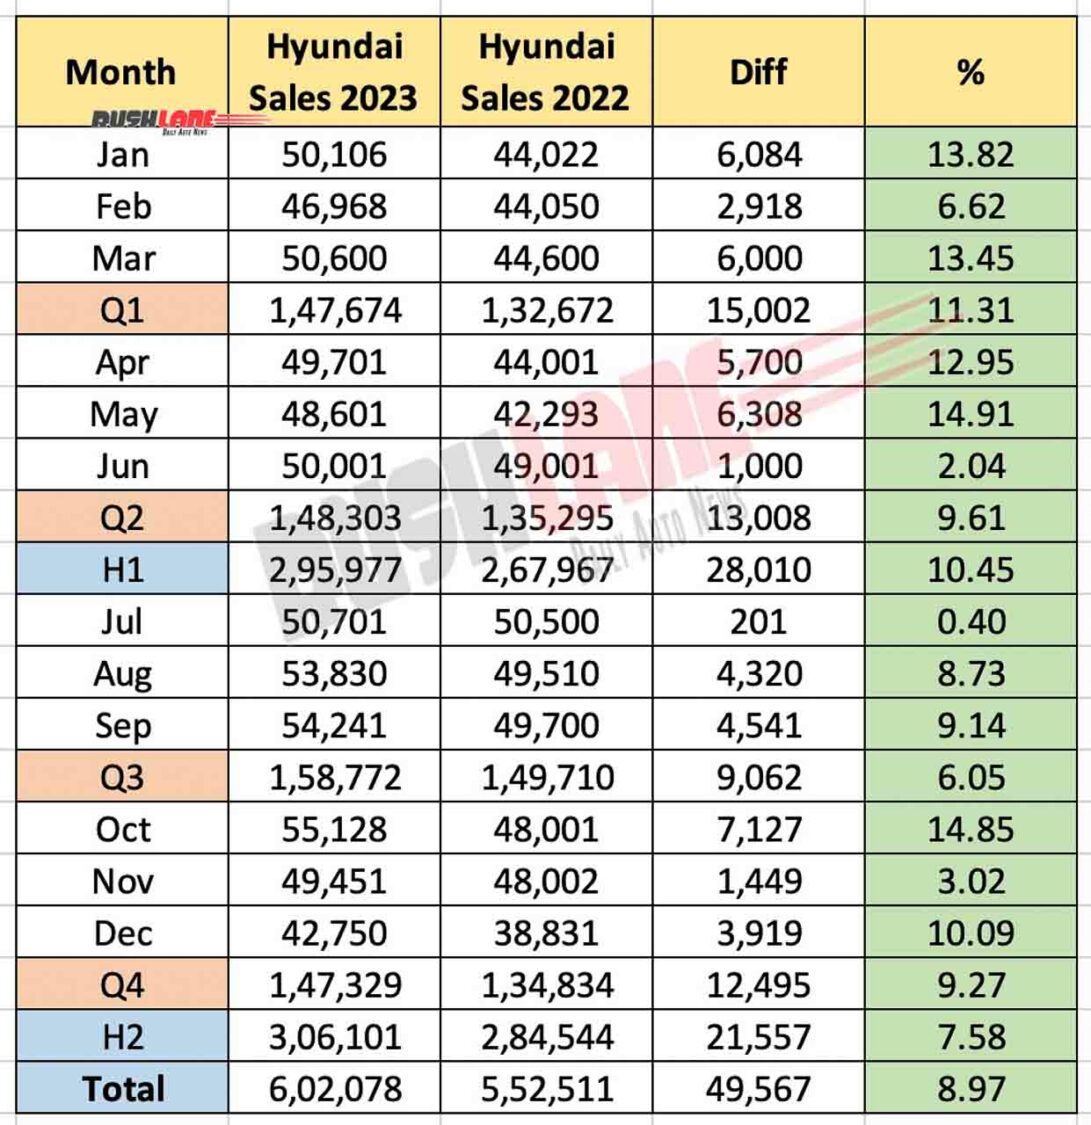 Hyundai India sales 2023 vs 2022